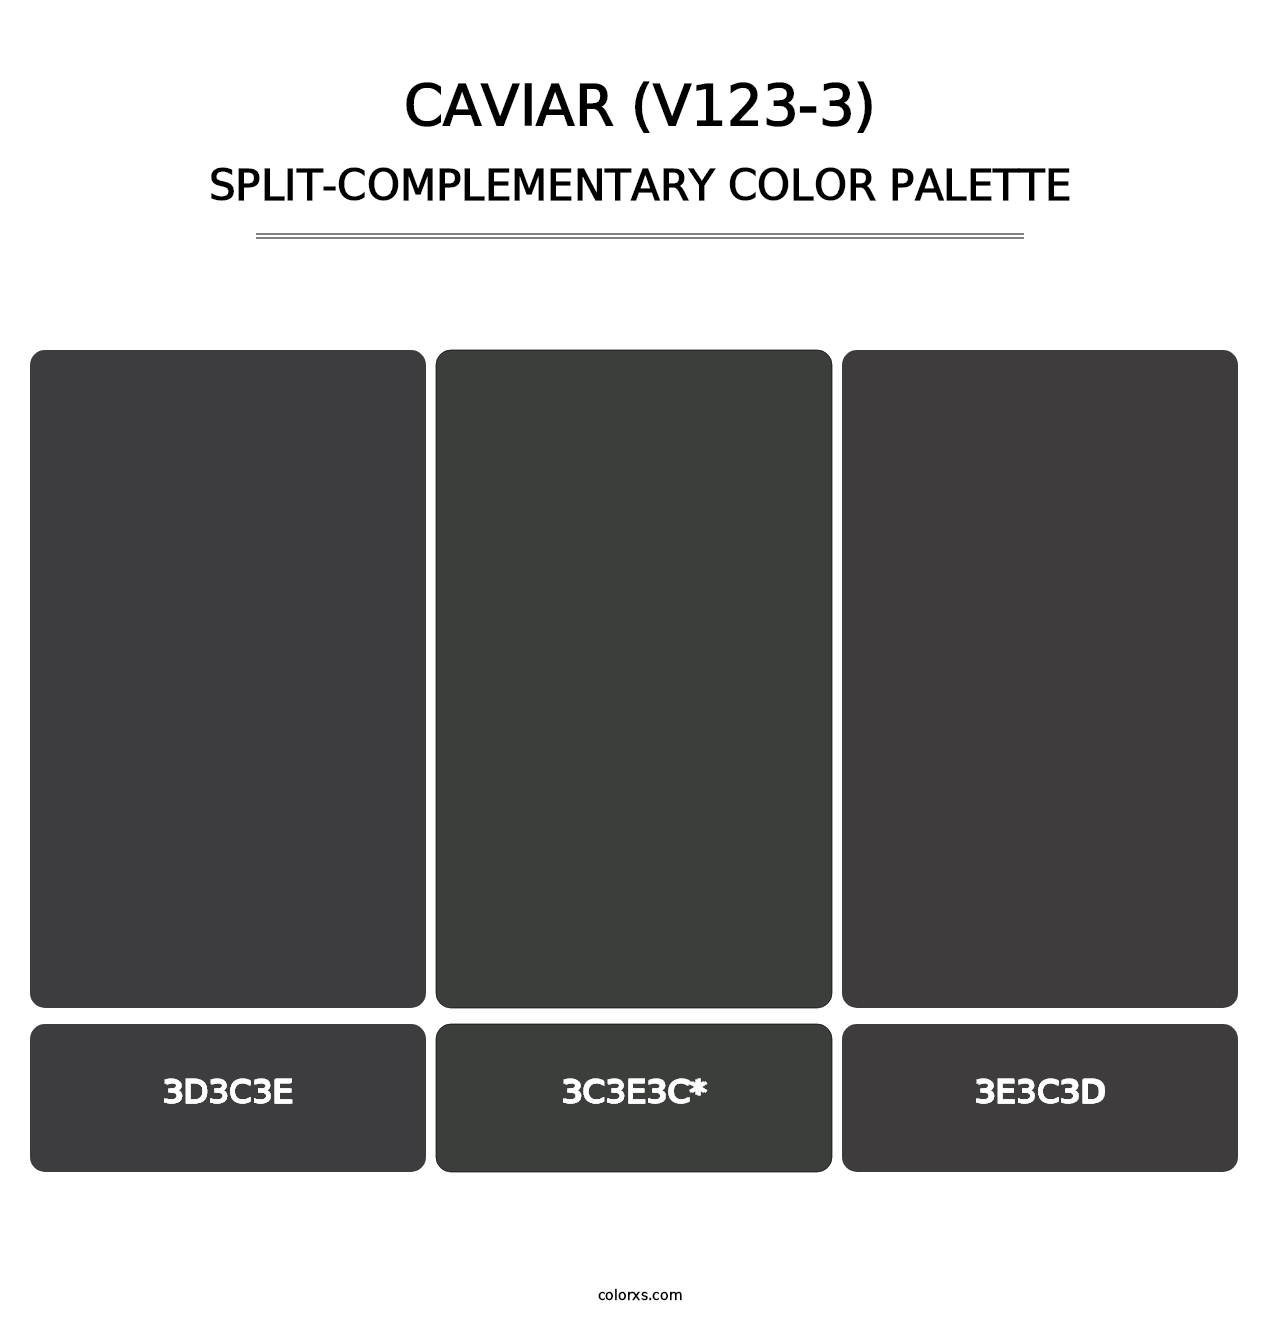 Caviar (V123-3) - Split-Complementary Color Palette